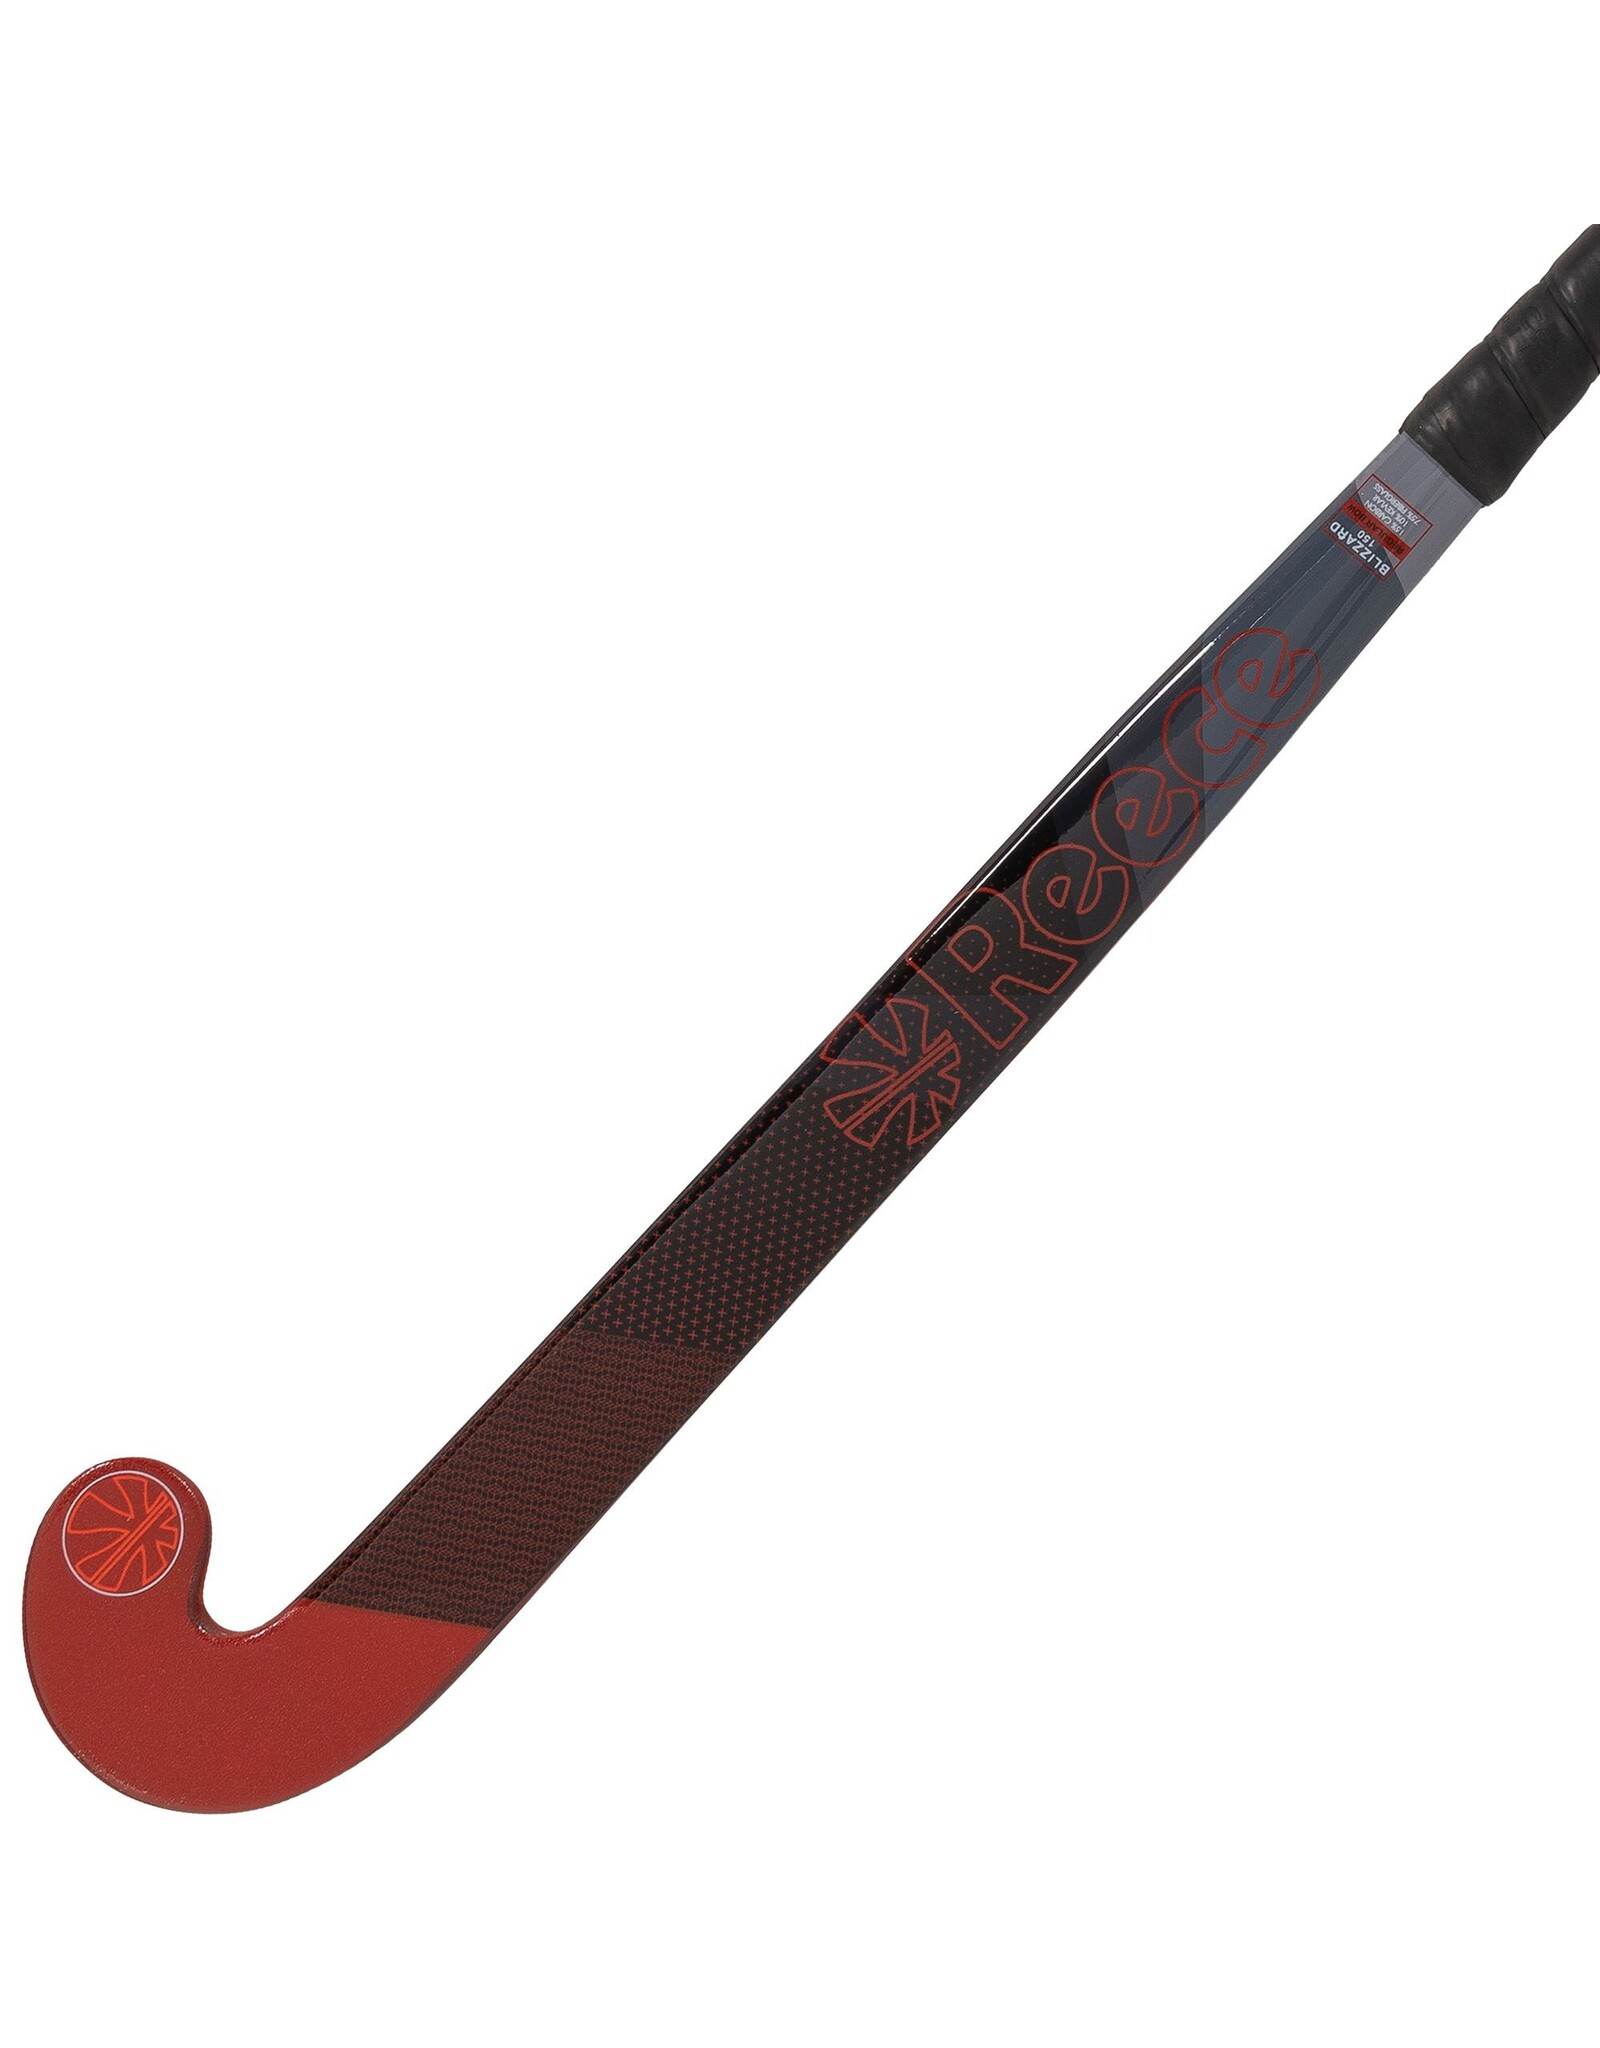 Reece Australia Blizzard 150 Hockey Stick-Red-Black